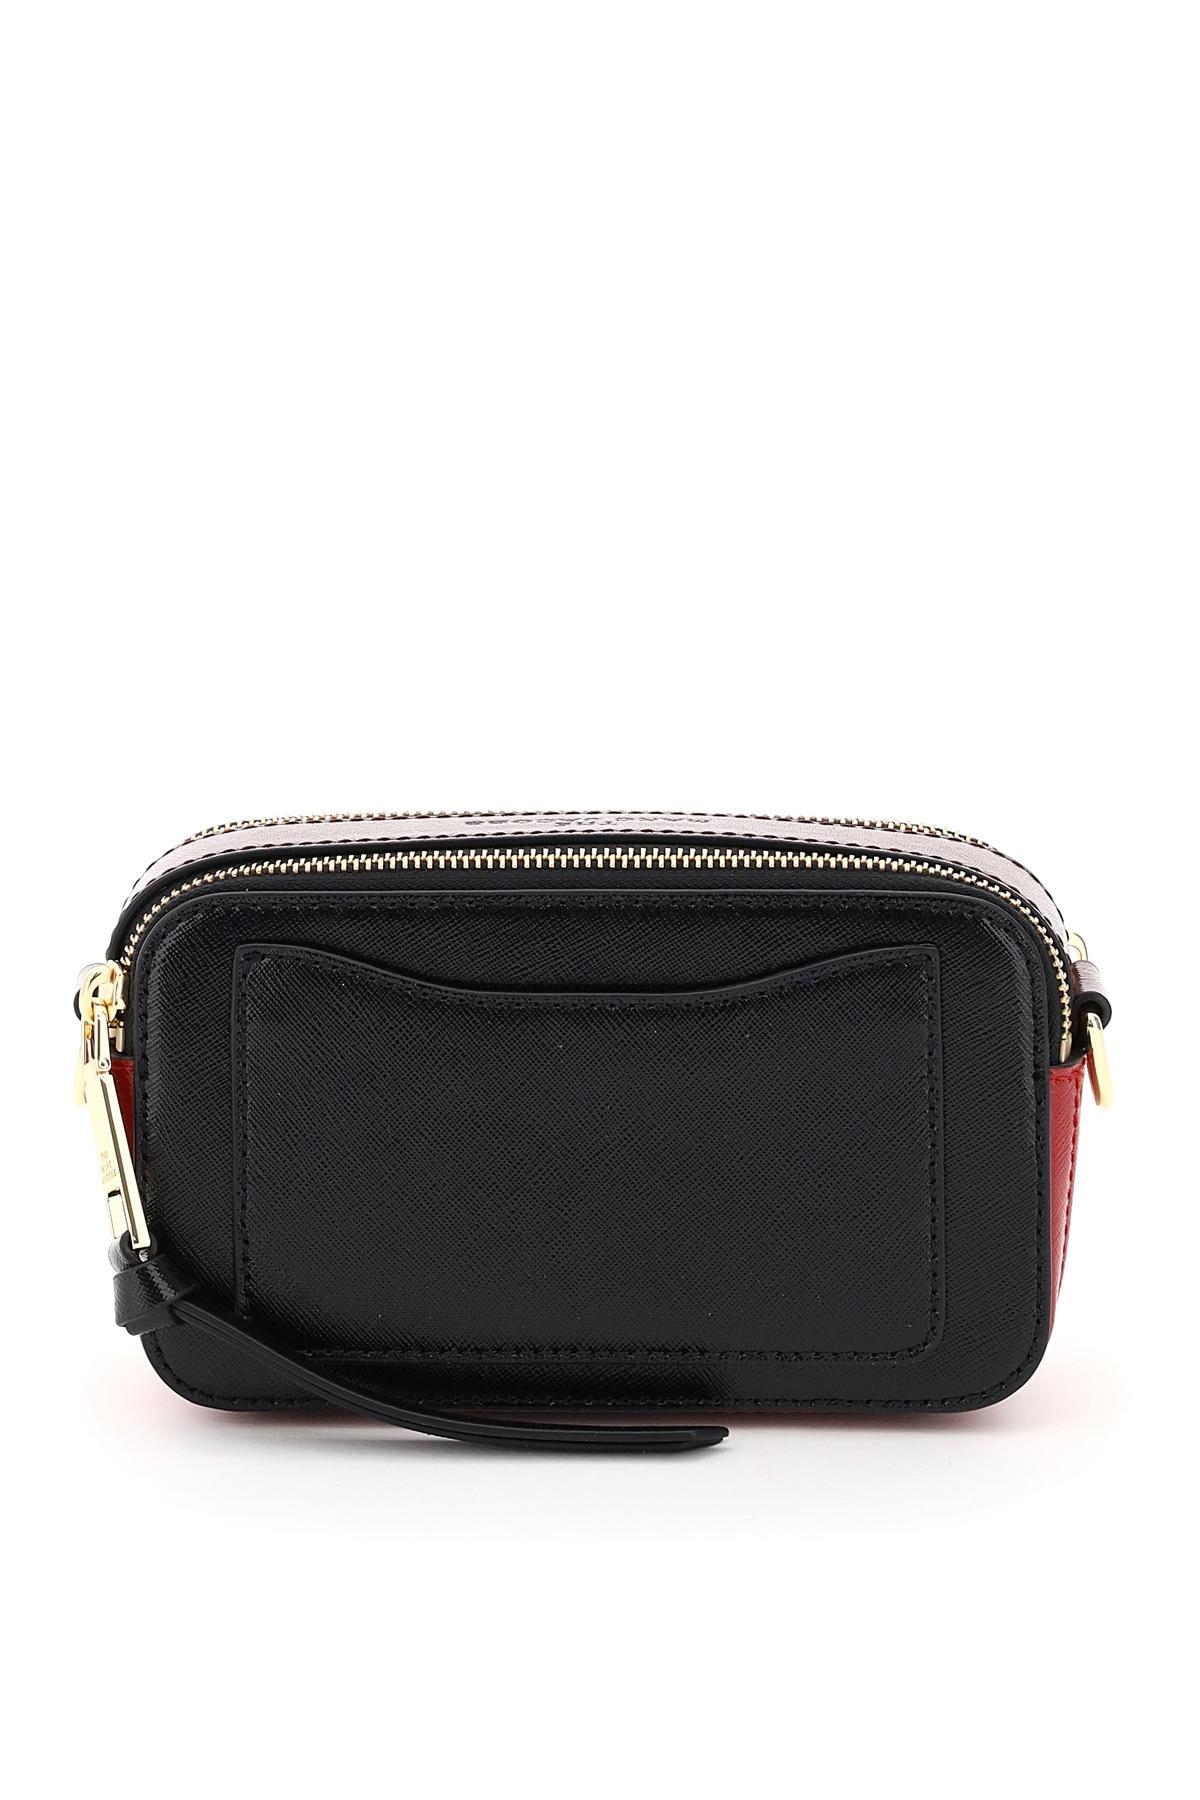 black snapshot purse